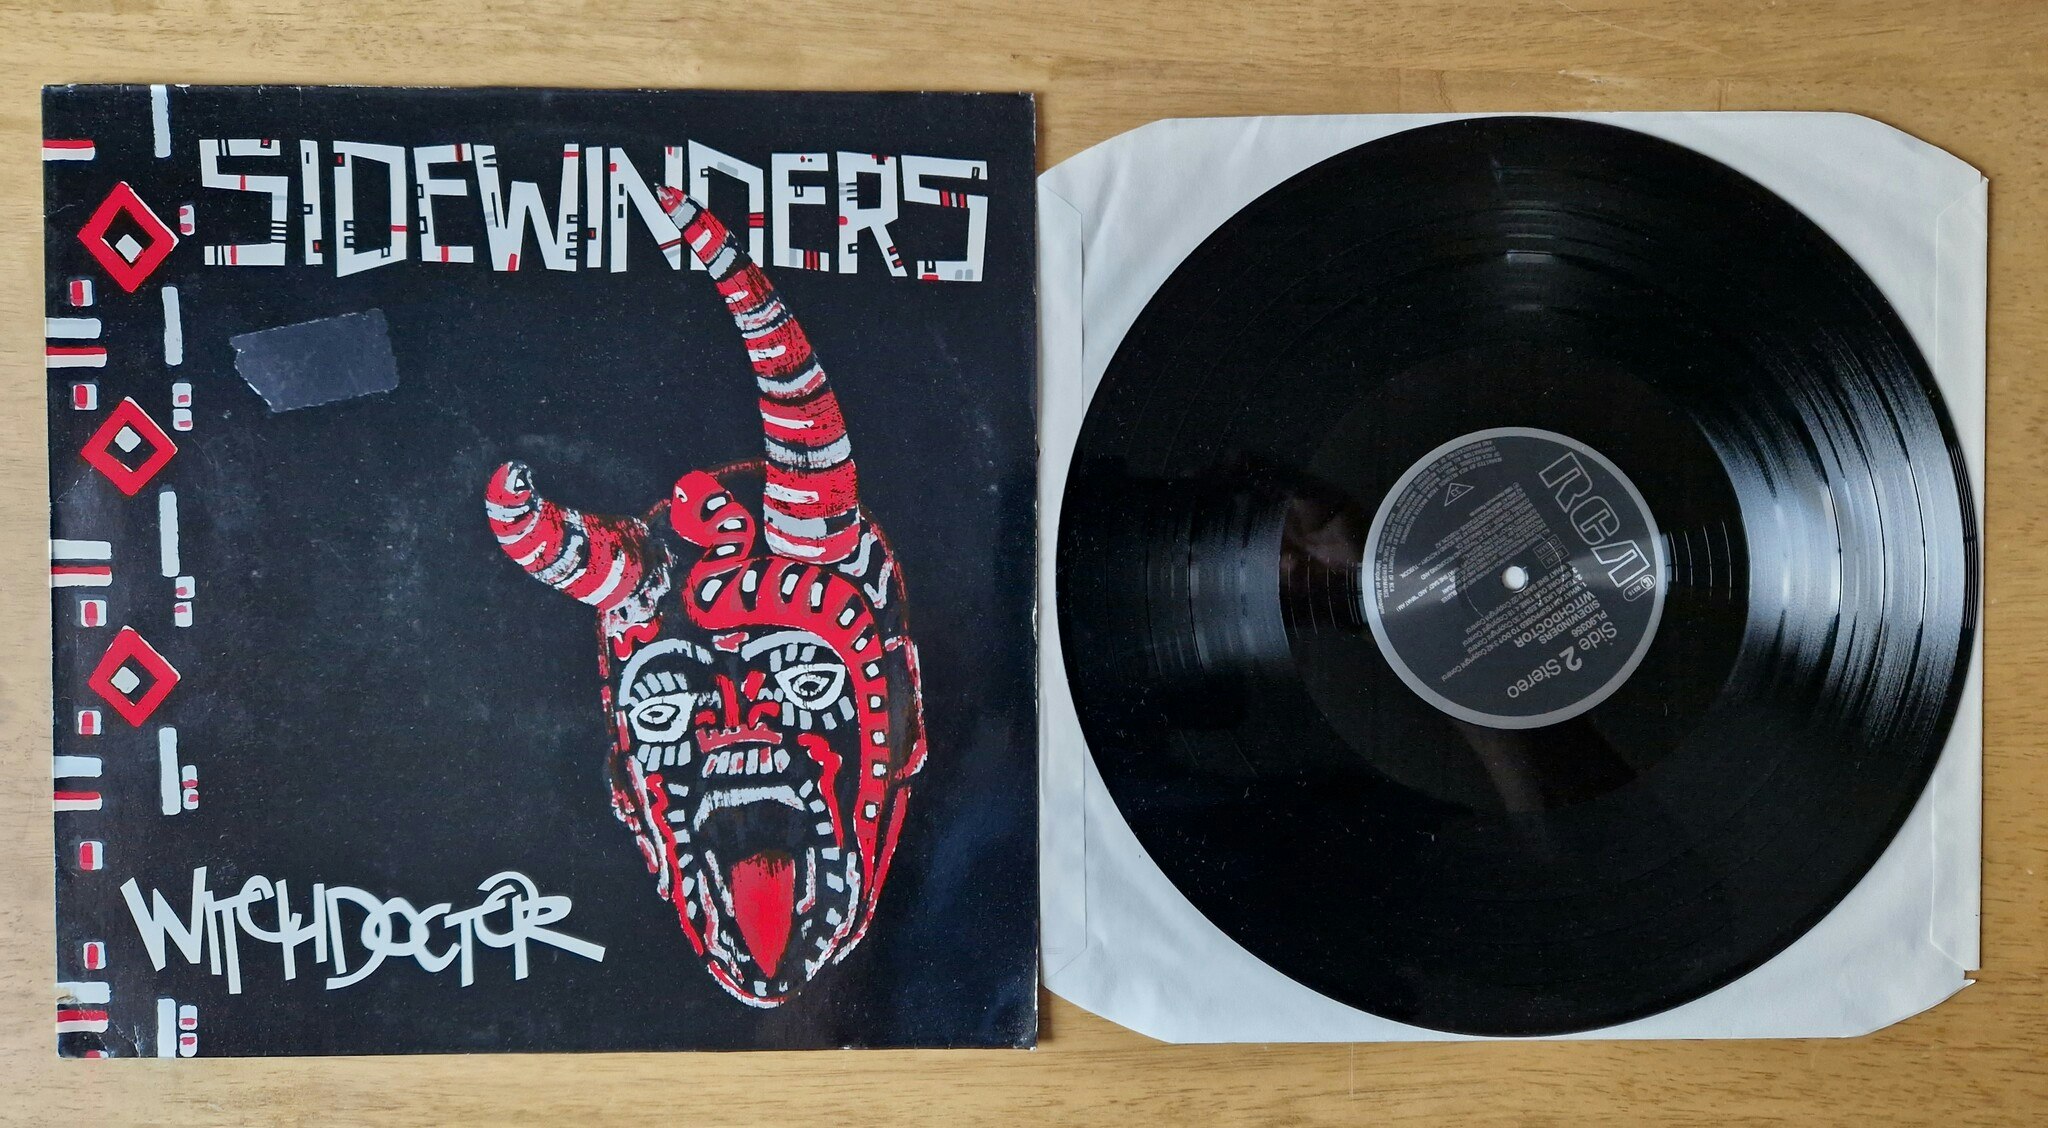 Sidewinders, Witchdoctor. Vinyl LP